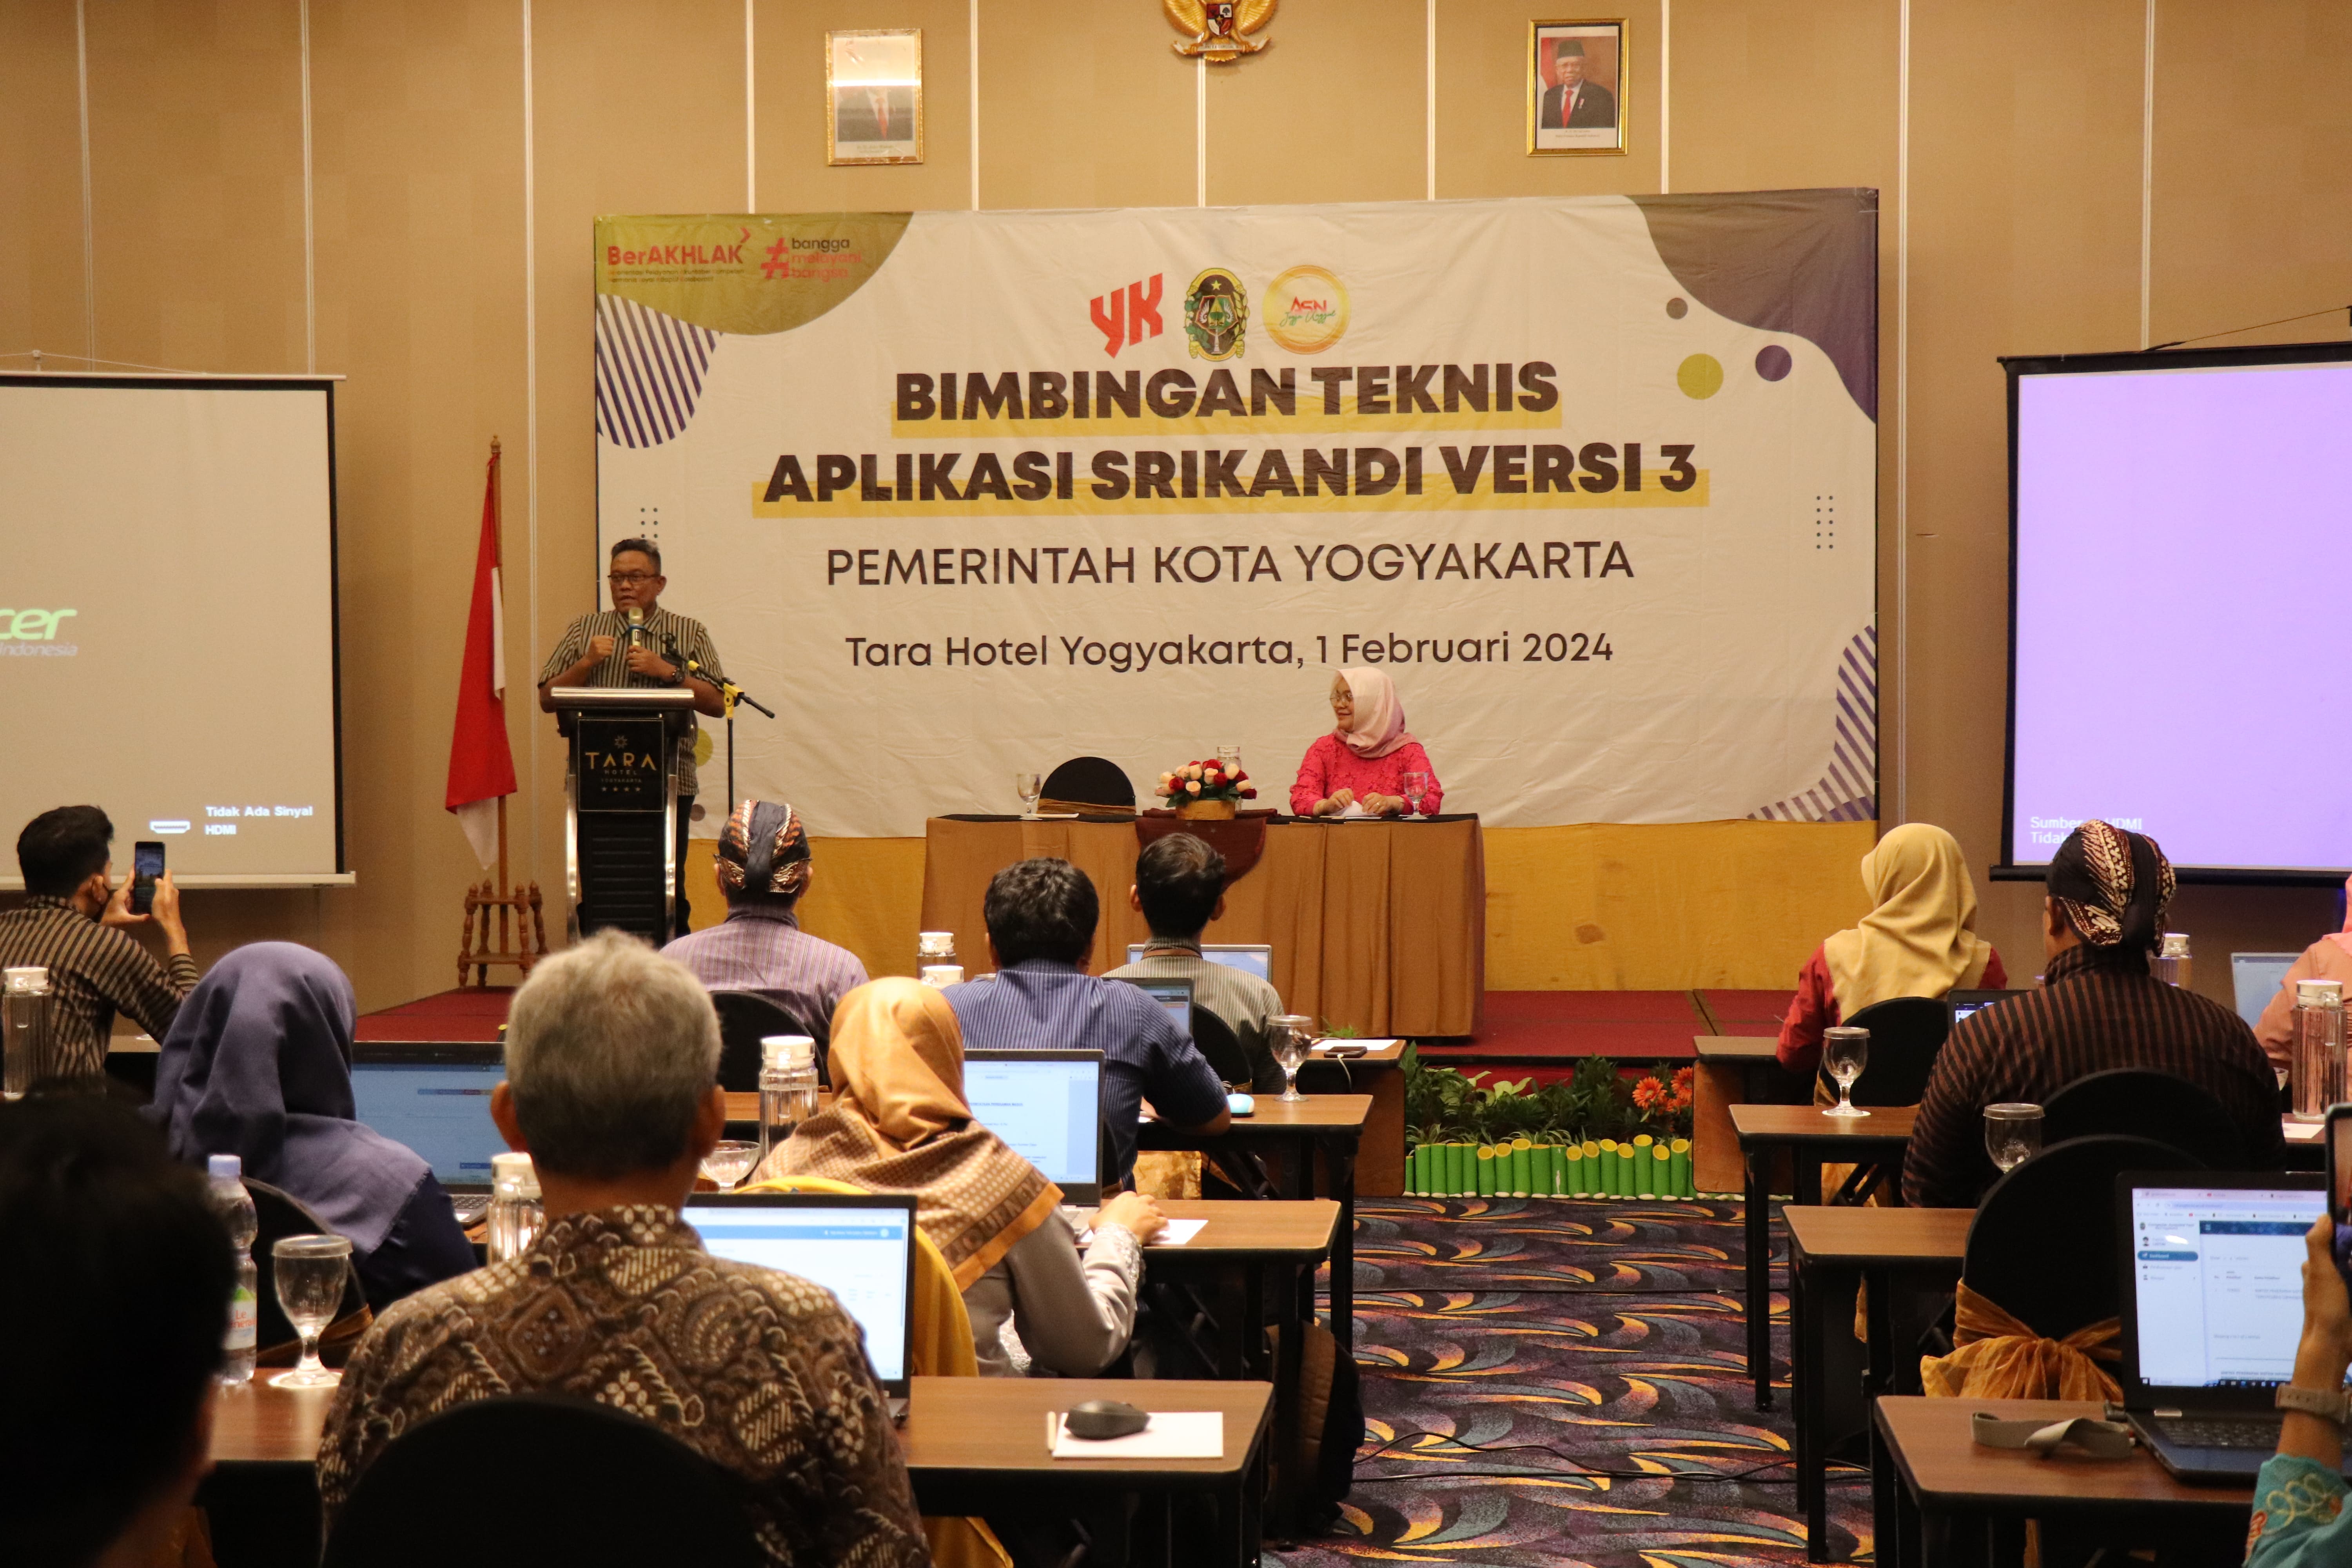 Bimbingan Teknis Srikandi Versi 3. Respon Cepat Pemerintah Kota Yogyakarta Terhadap Kebijakan ANRI